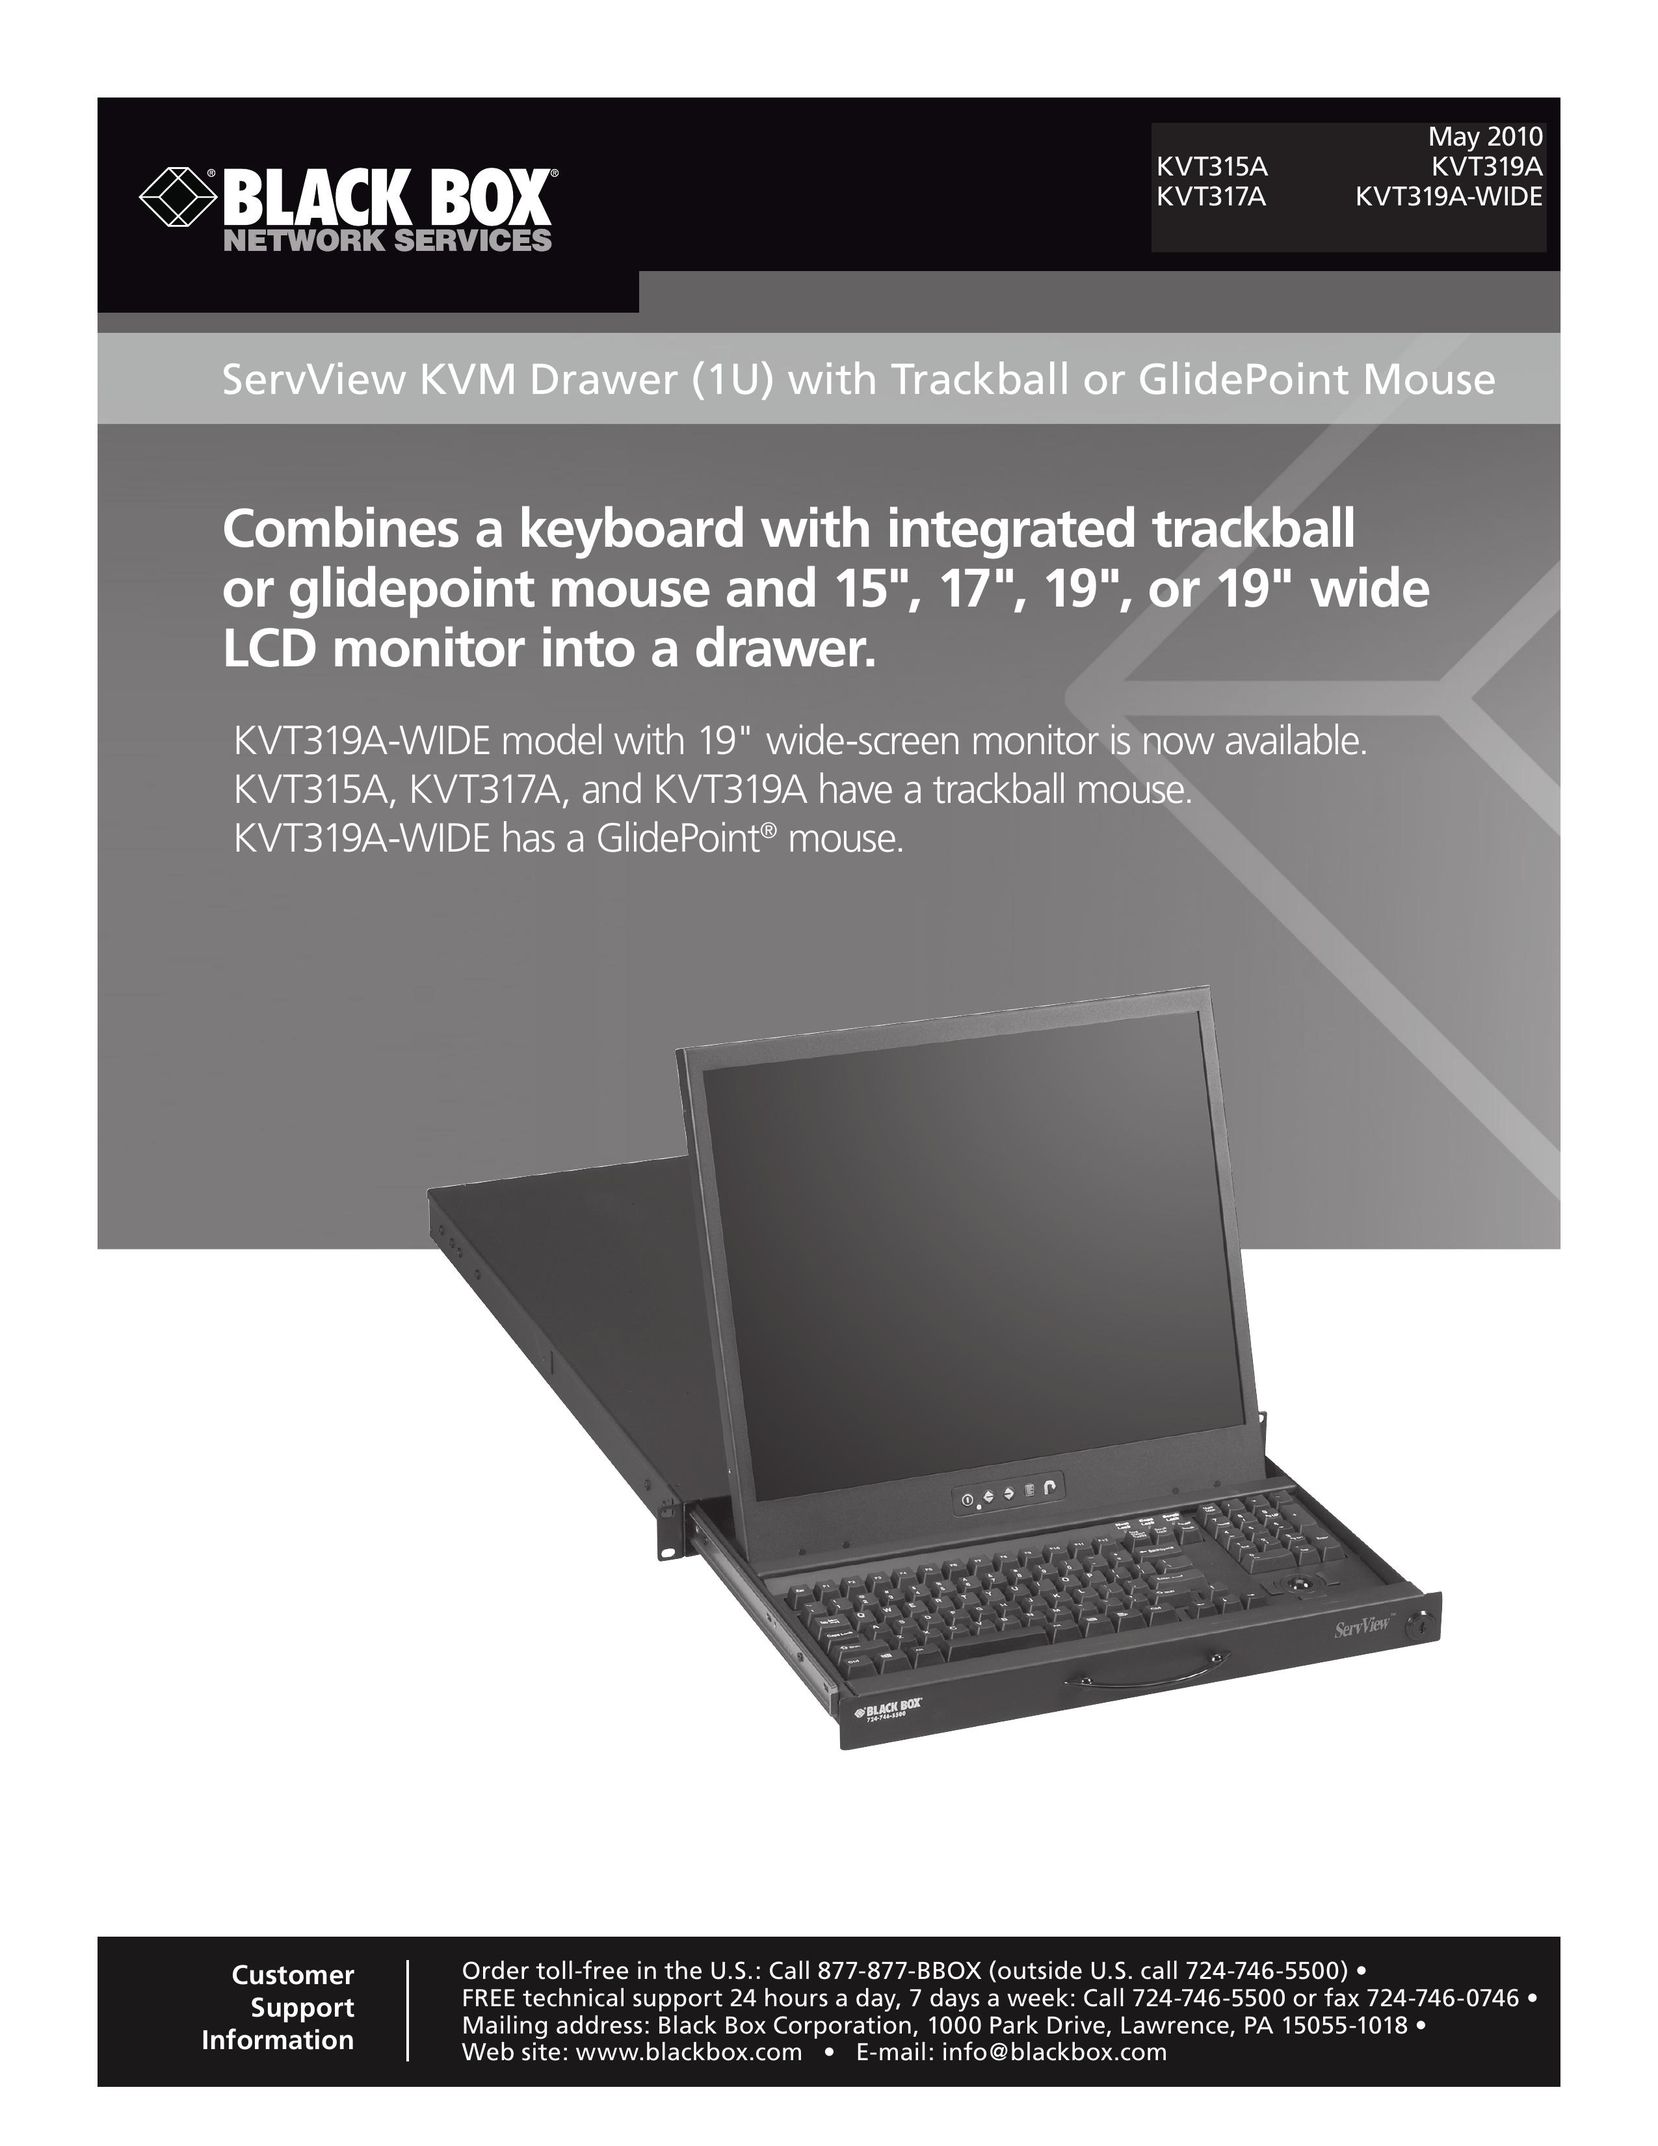 Black Box KVT319A-WIDE Personal Computer User Manual